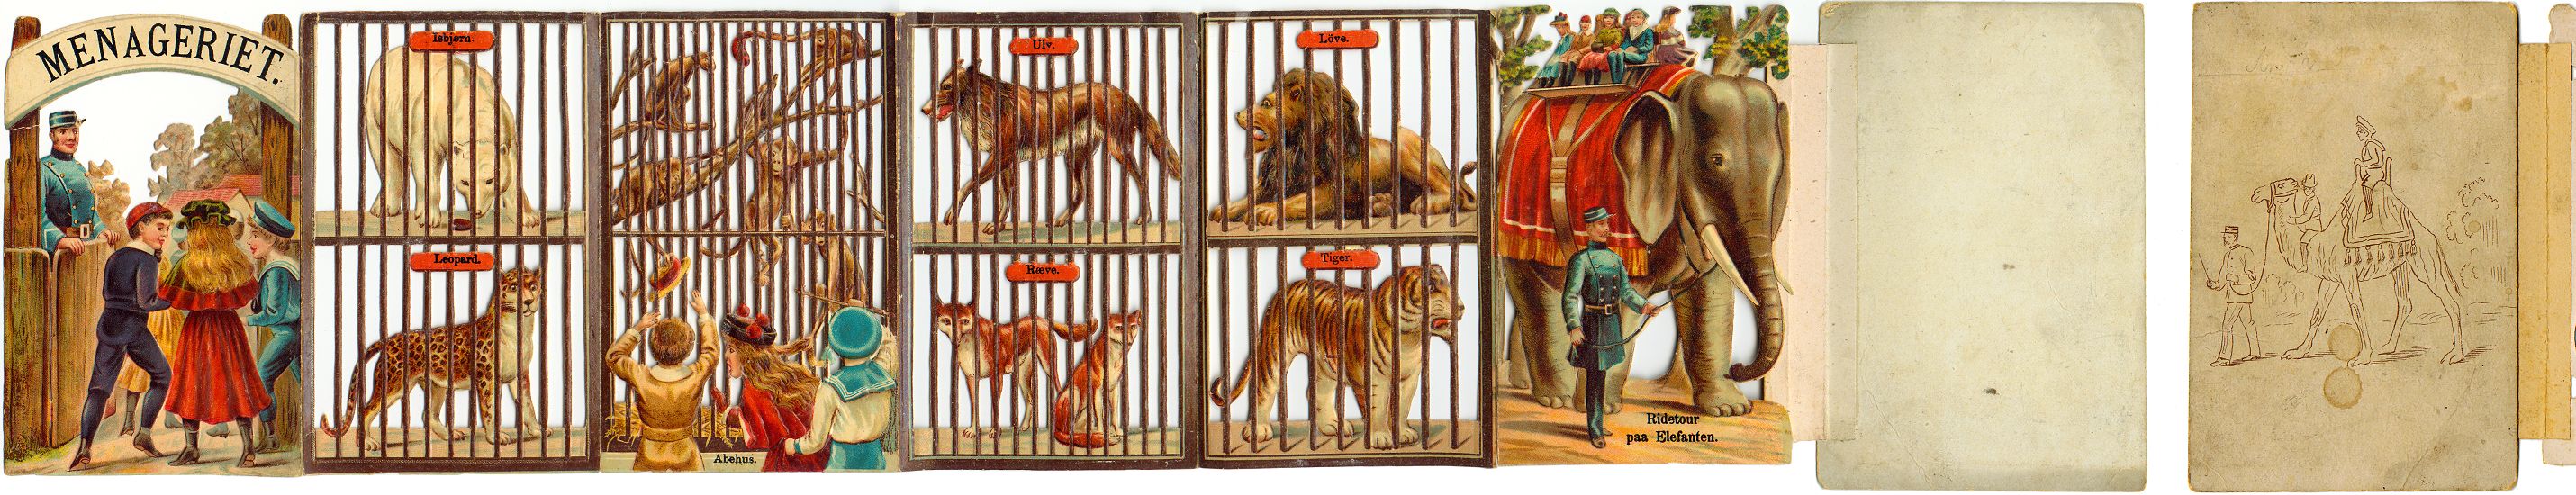 Menageriet - Menagerie - Zoo - Zoologisk Have - Cirkus - Zirkus - Kinderbuch - Leporelleo - Chatterbox